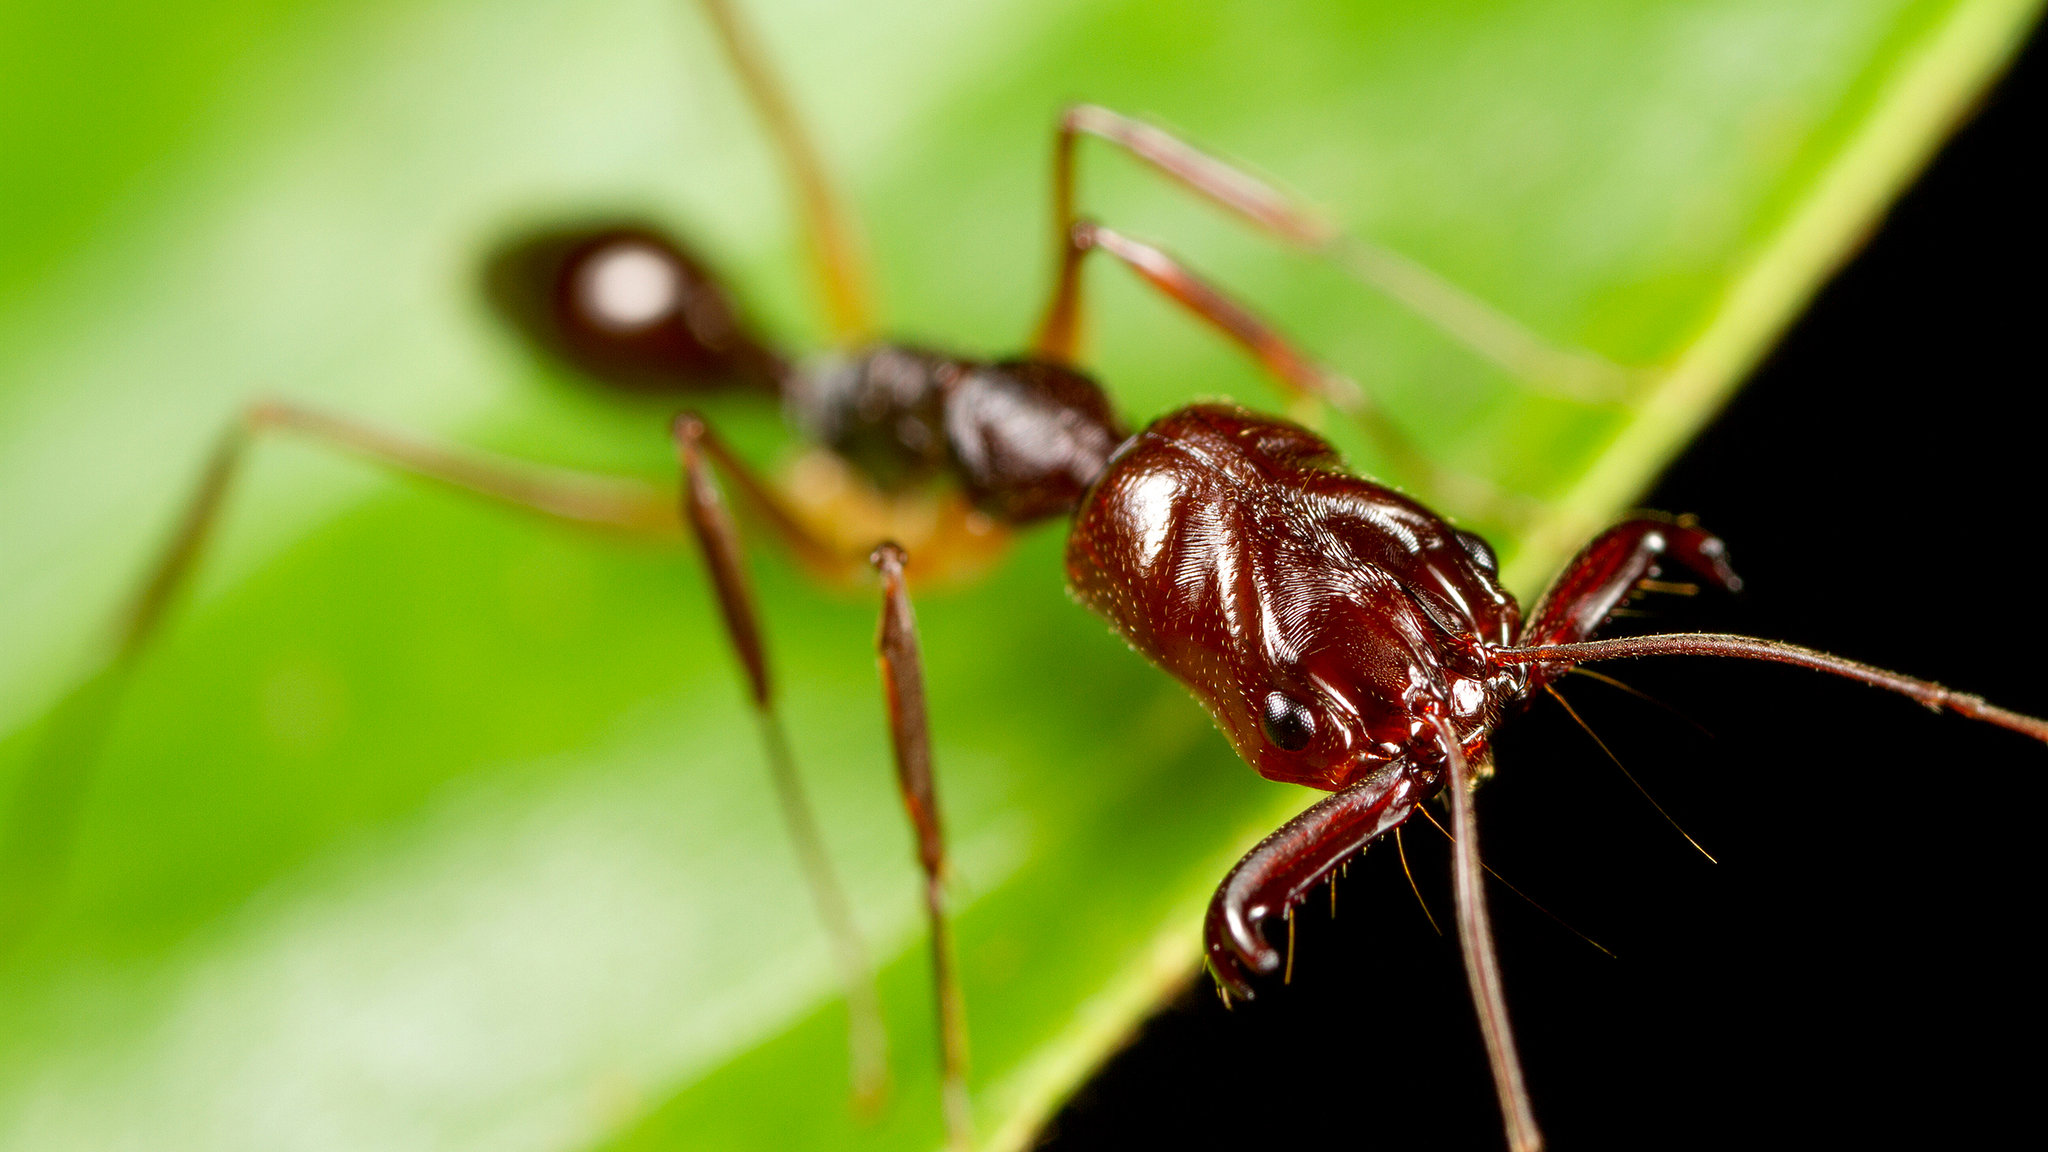 types of ants: acrobat ants, carpenter ants, crazy ants, crazy ants, European ants